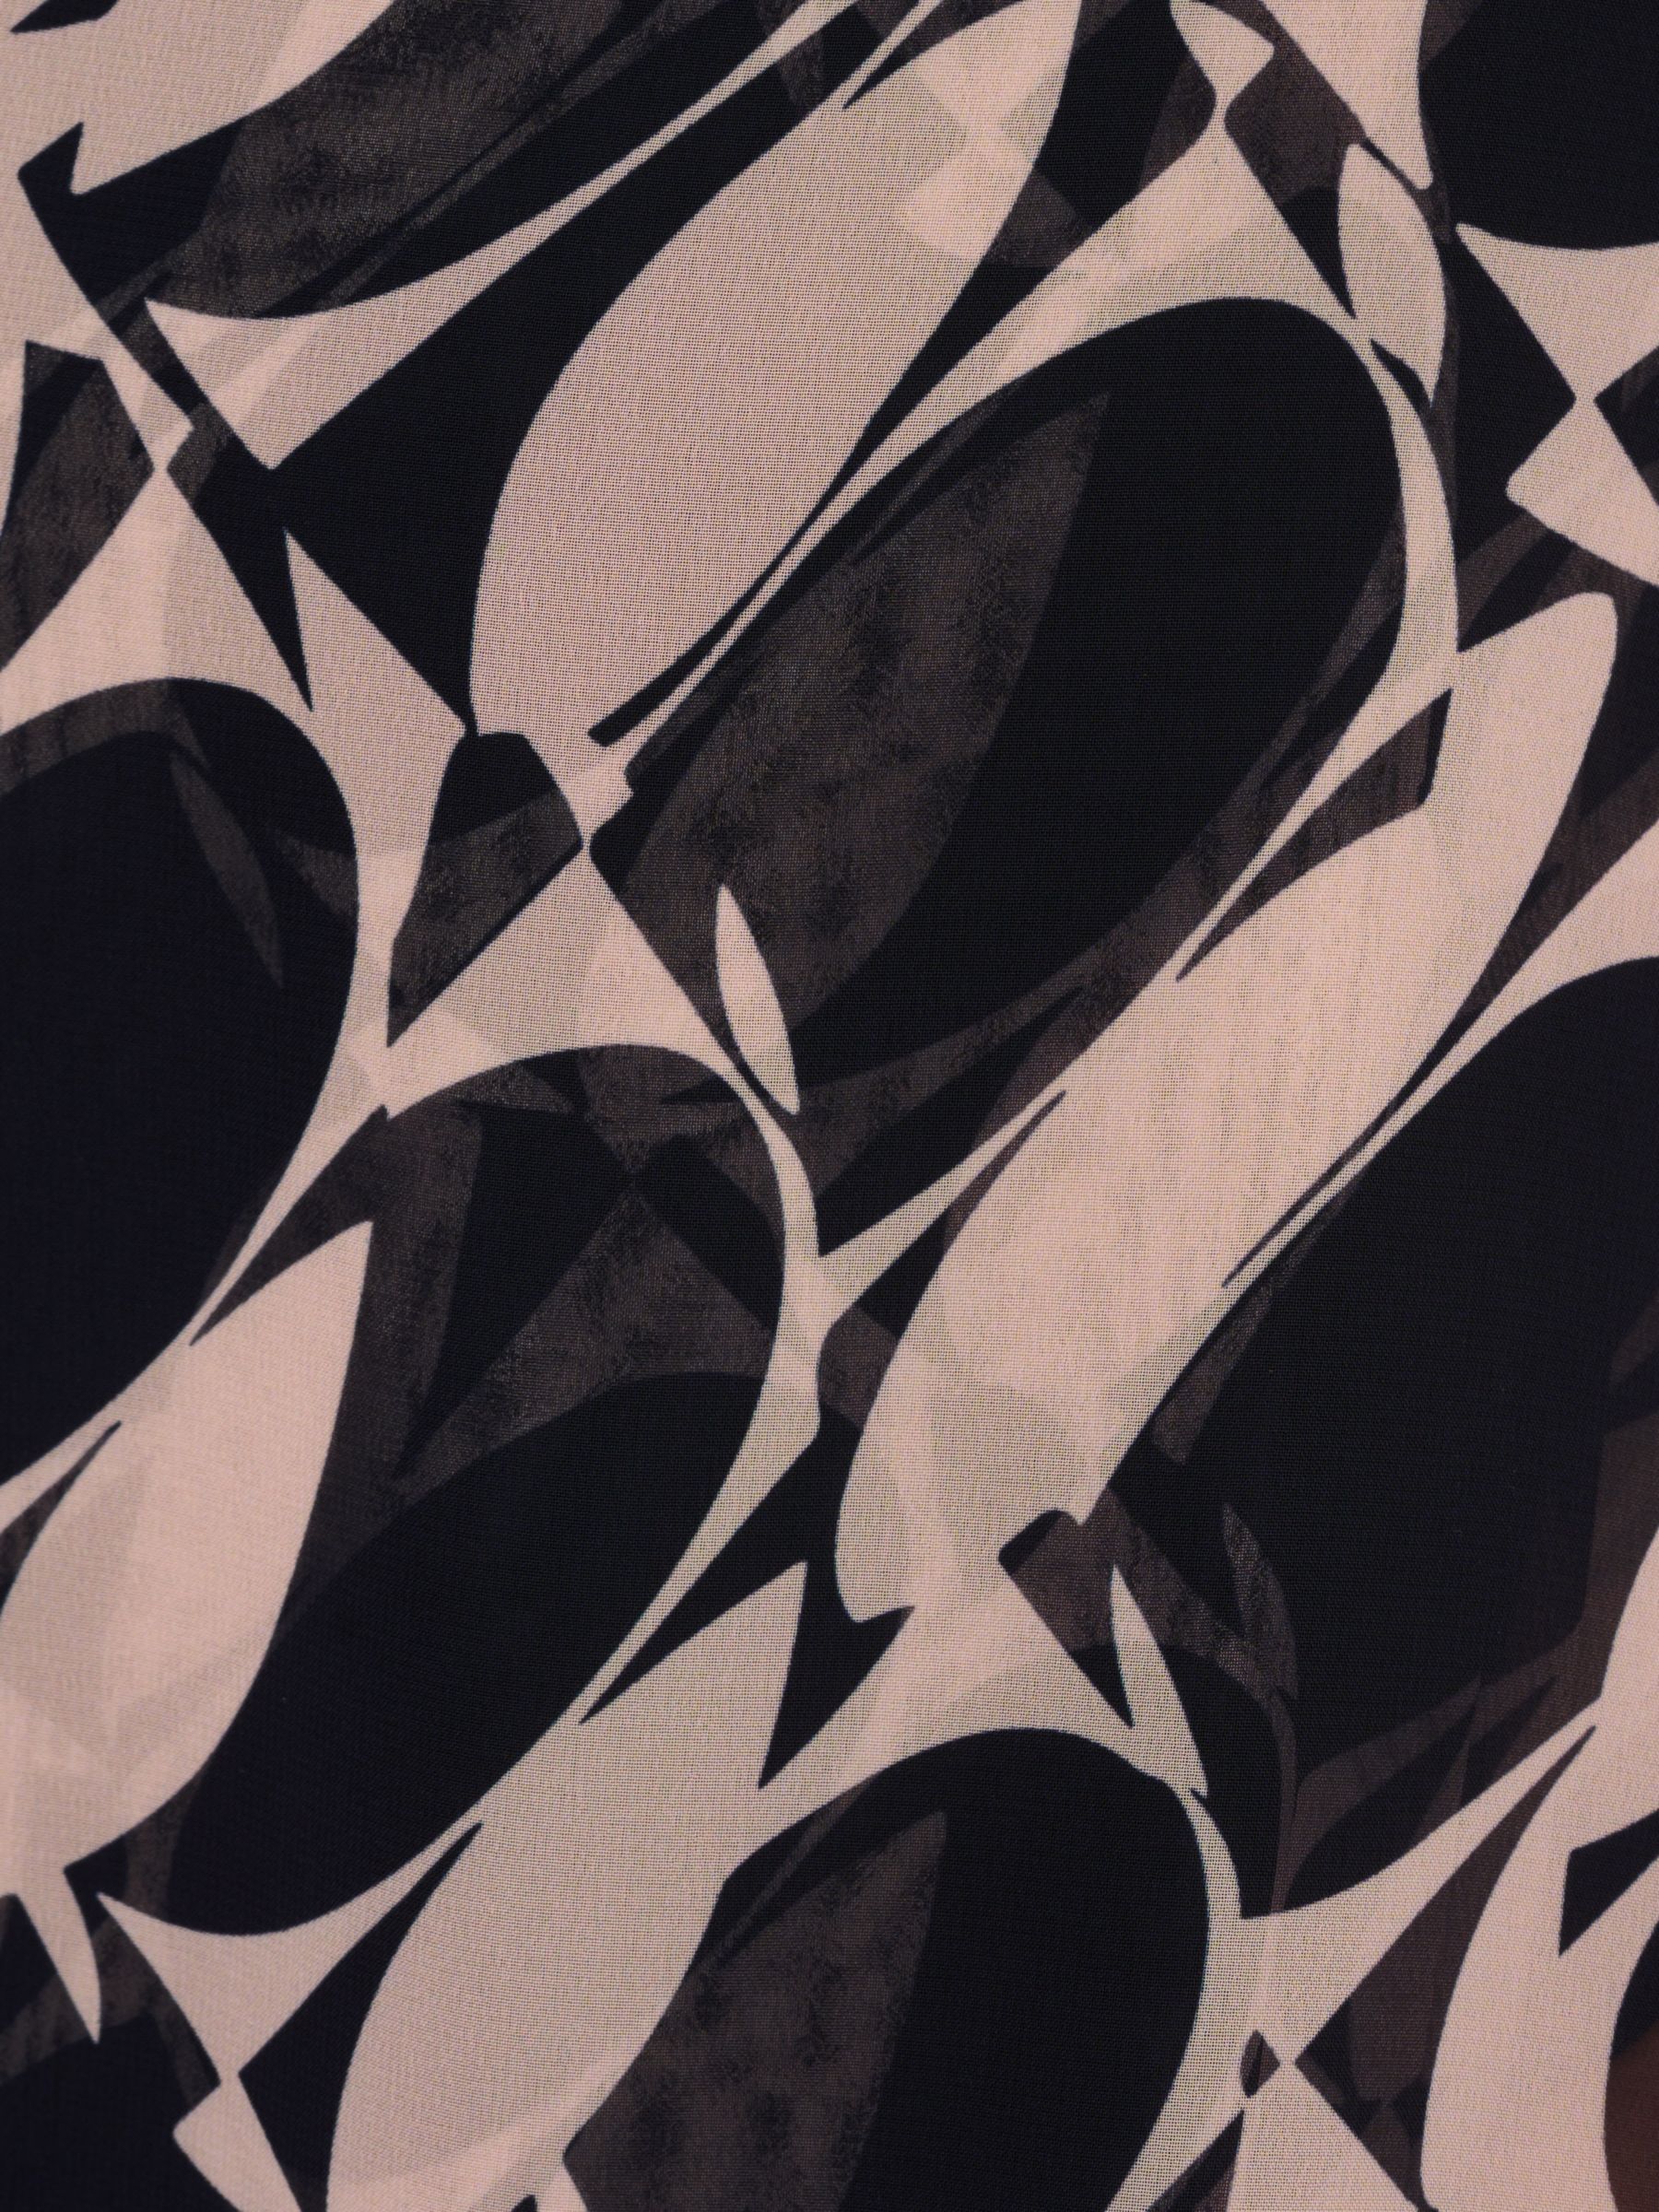 Adrianna Papell Abstract Print Frill Maxi Dress, Navy/Blush, 6